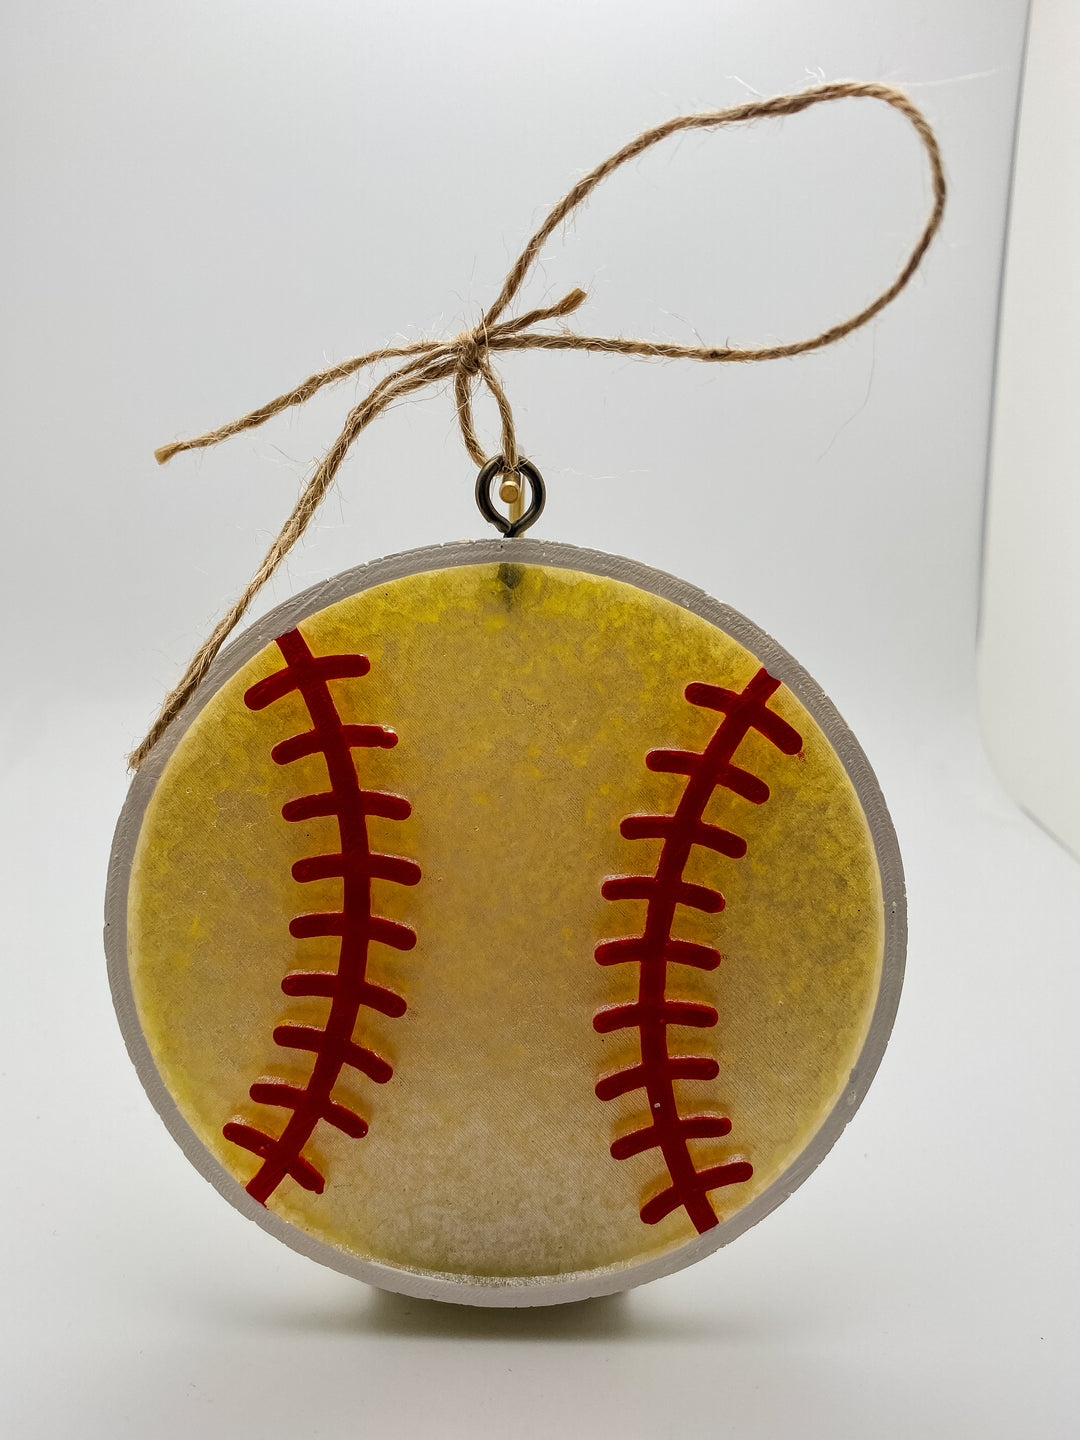 Baseball--Leather Car Freshie by Dysart